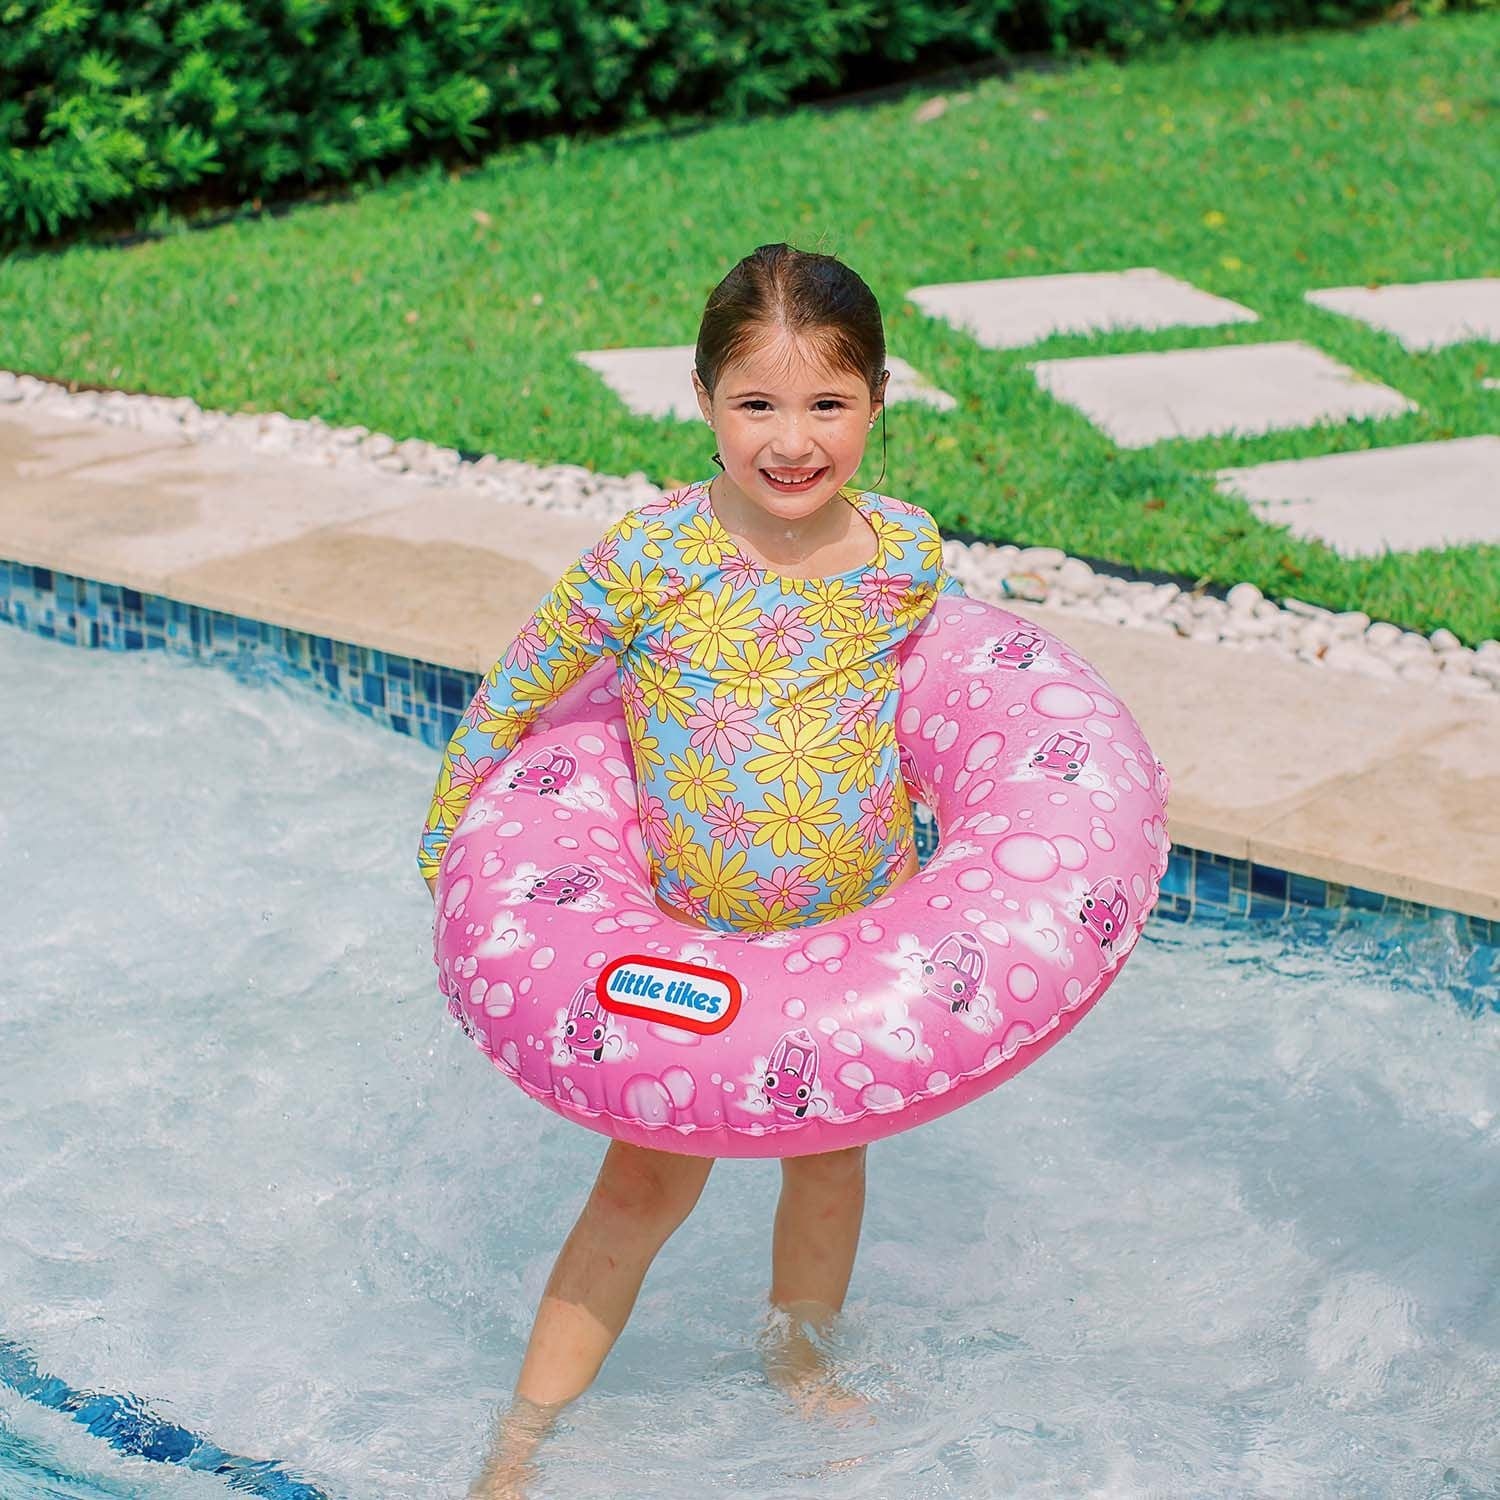 PoolCandy Inflatable Pool Tube Little Tikes Pool Tube - 27" - Pink Pattern